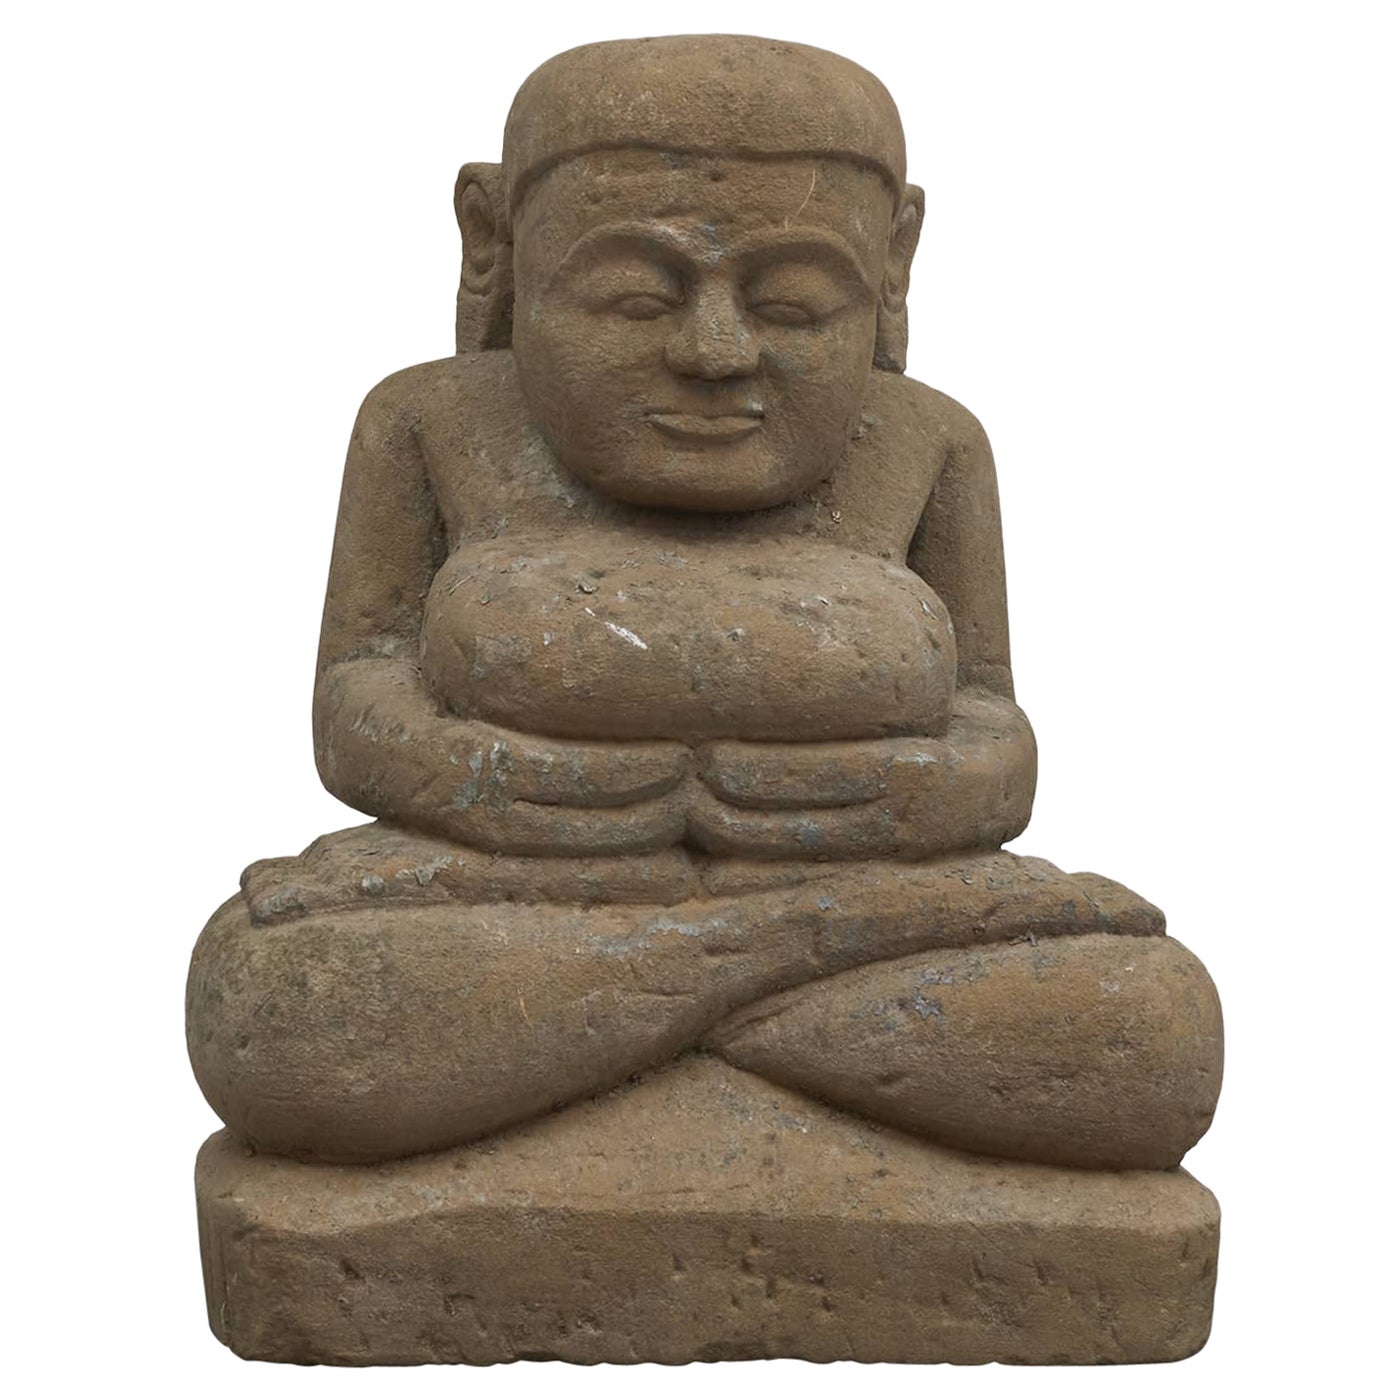 Bouddha birman assis en grès birman du 17-18e siècle en méditation